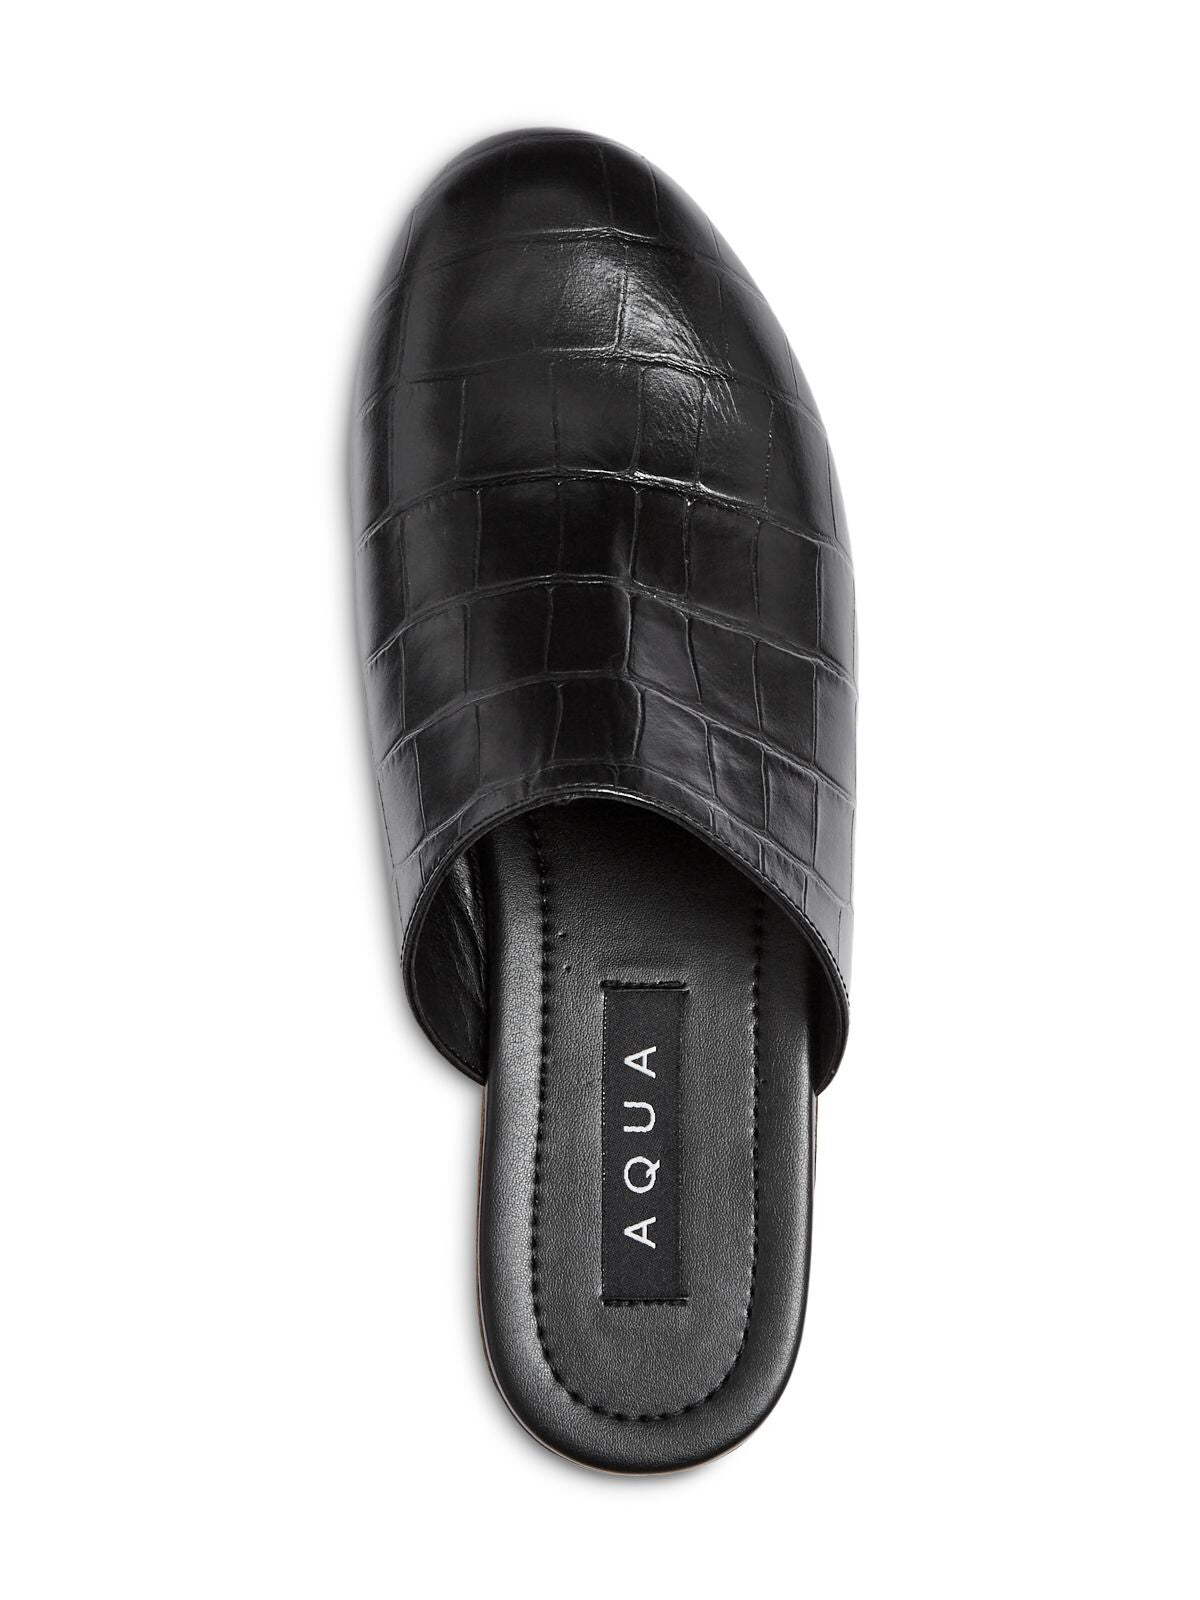 AQUA Womens Black Crocodile Comfort Round Toe Block Heel Slip On Leather Clogs Shoes 9 B